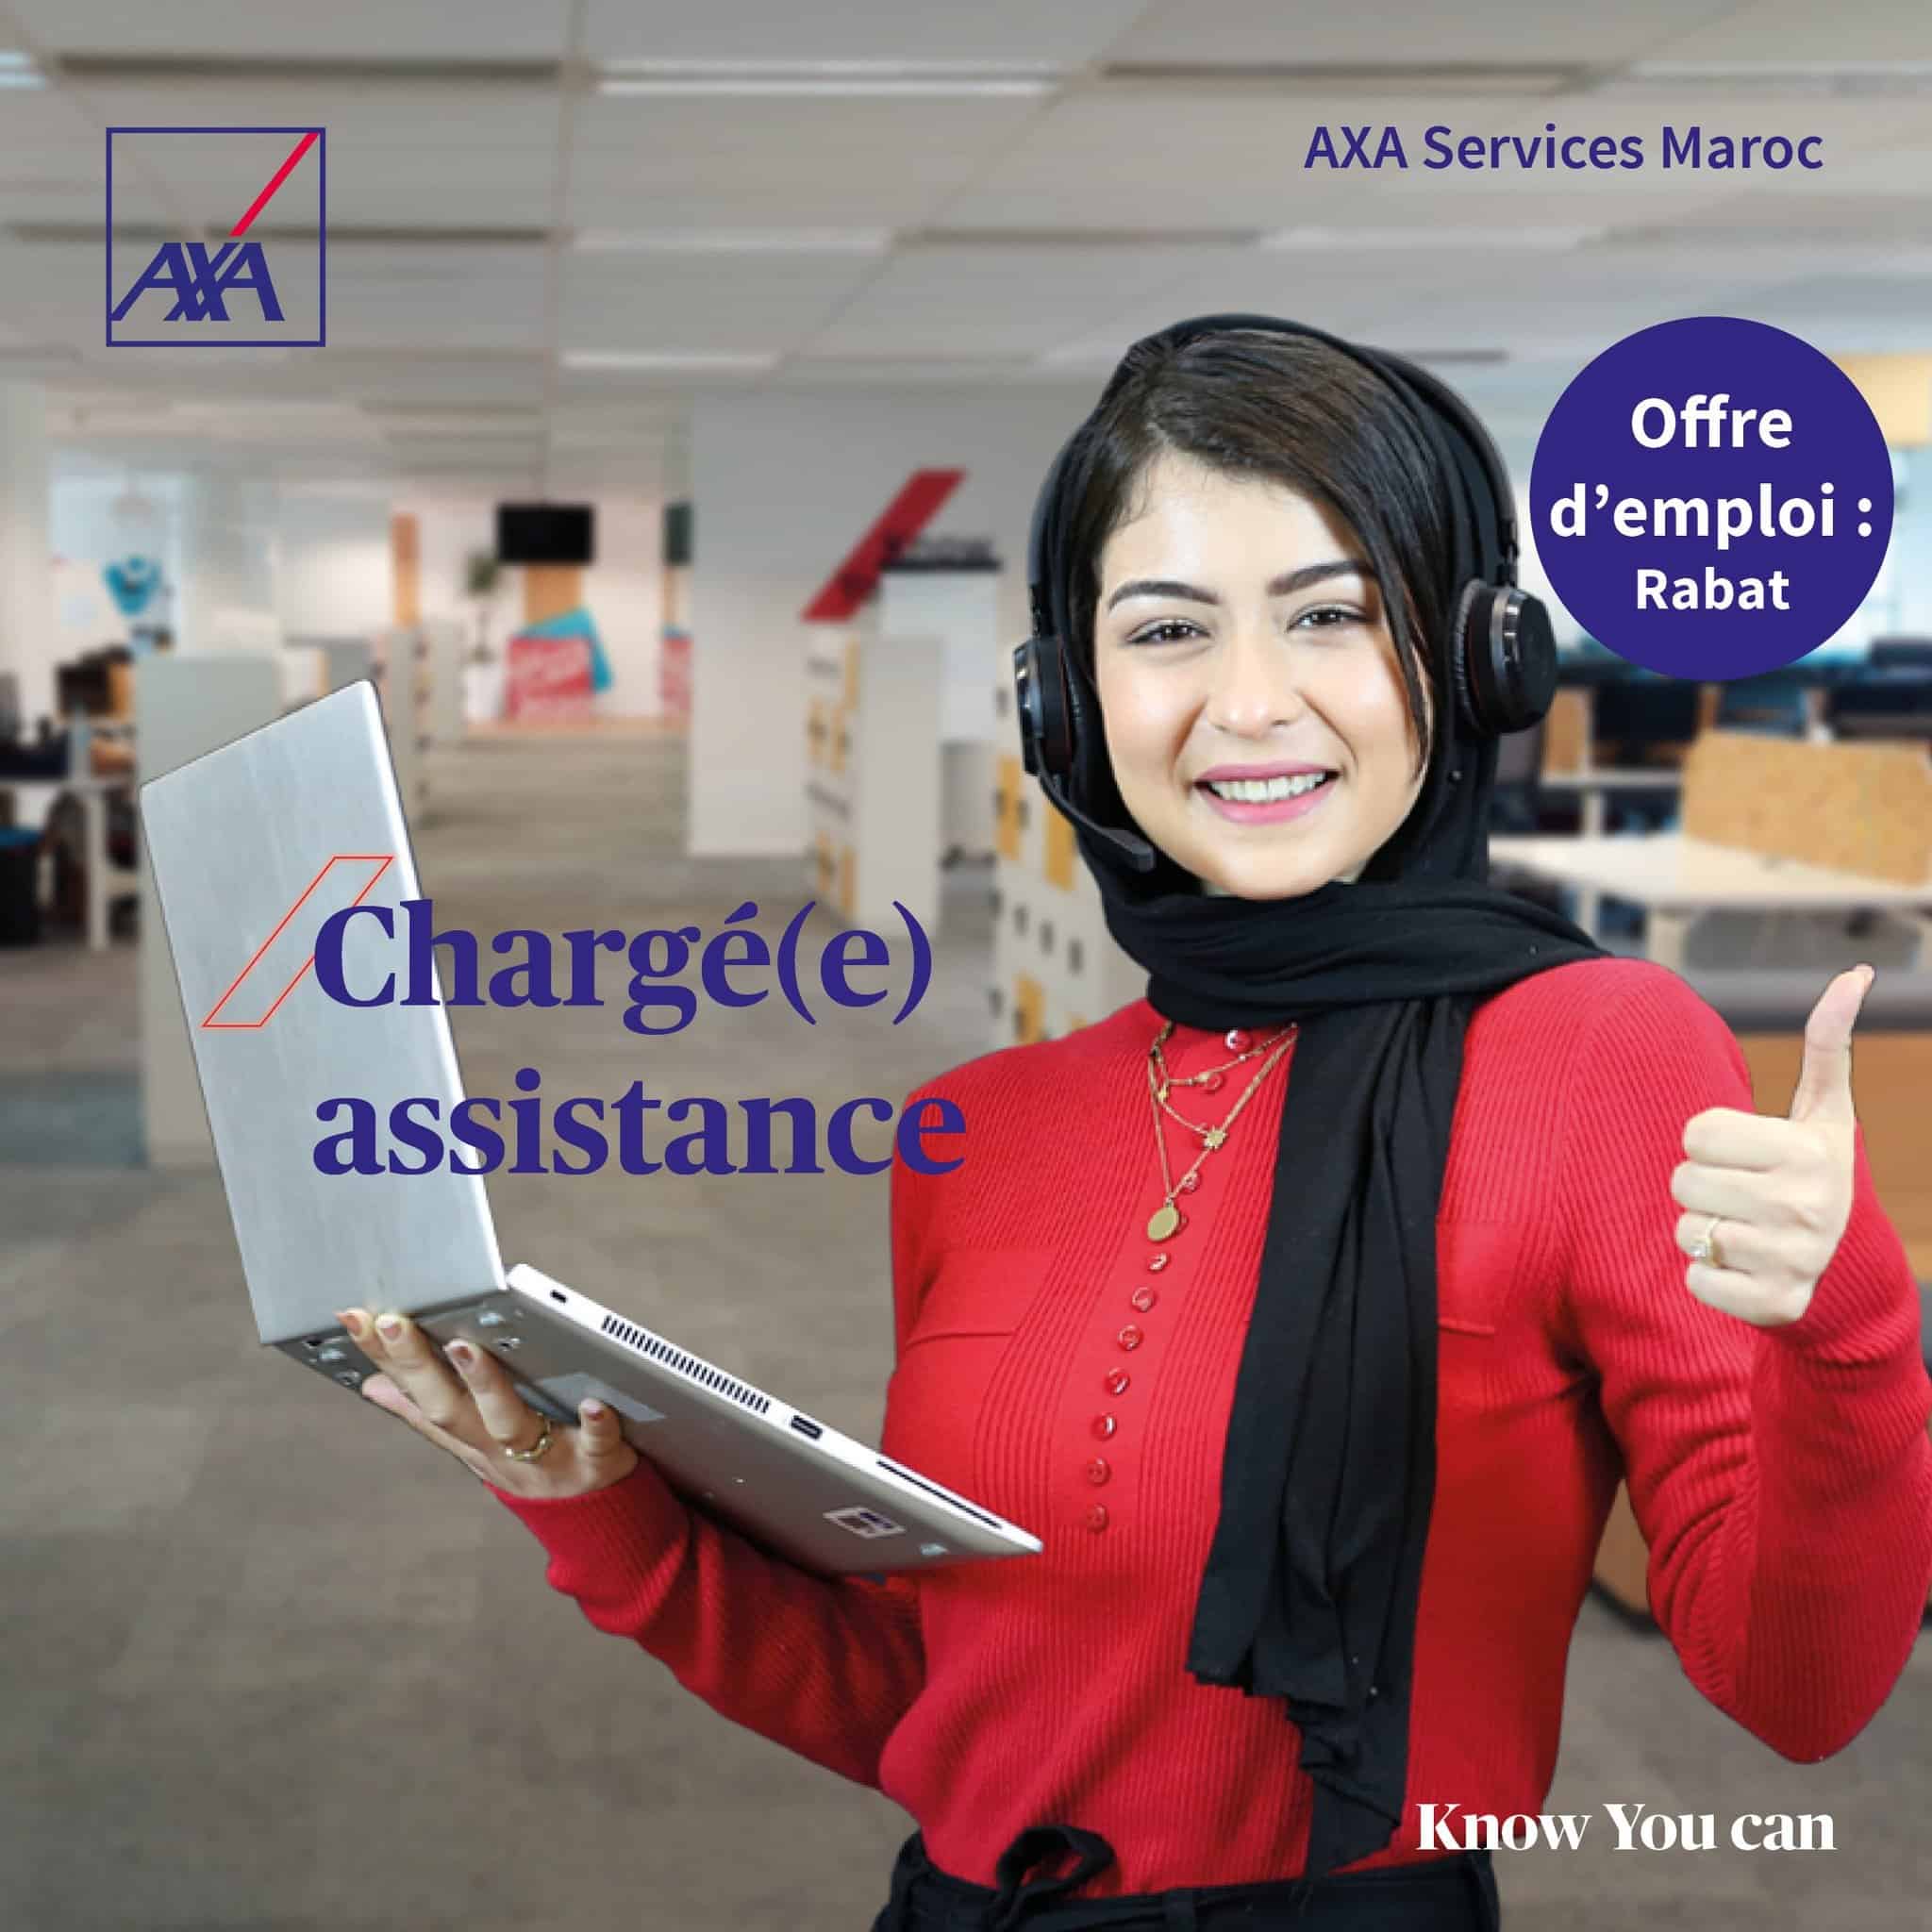 AXA Services Maroc recrute des Chargés d'Assistance